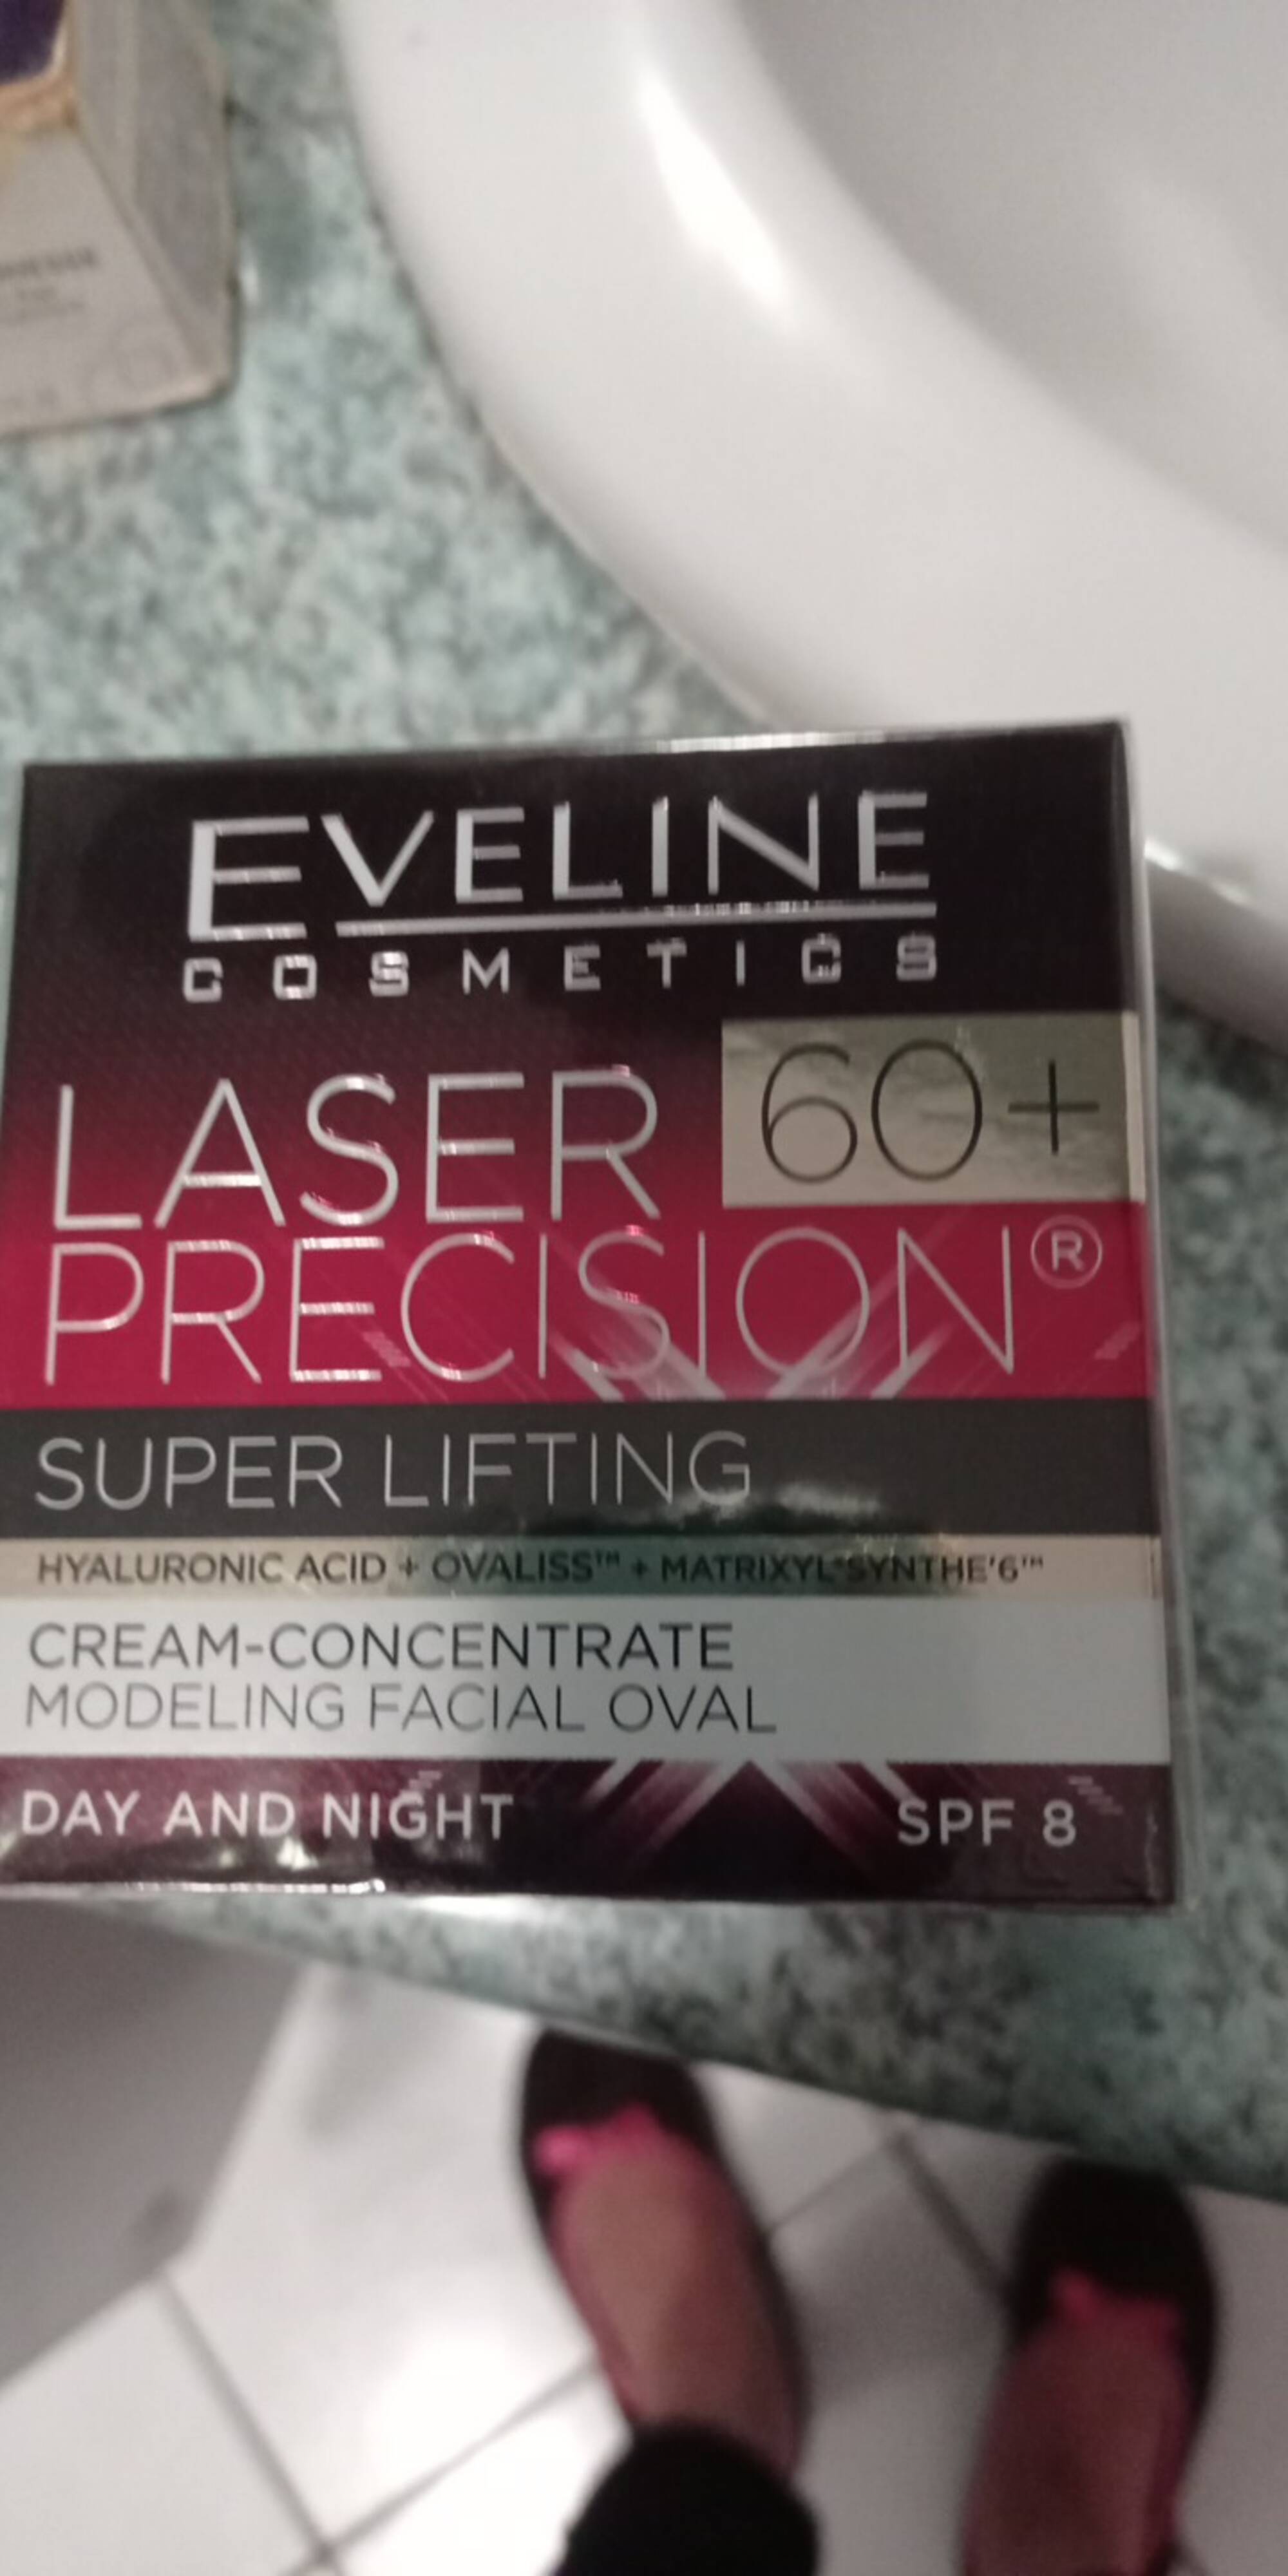 EVELINE COSMETICS - Laser précision 60 + - Cream-concentrate modeling facial oval